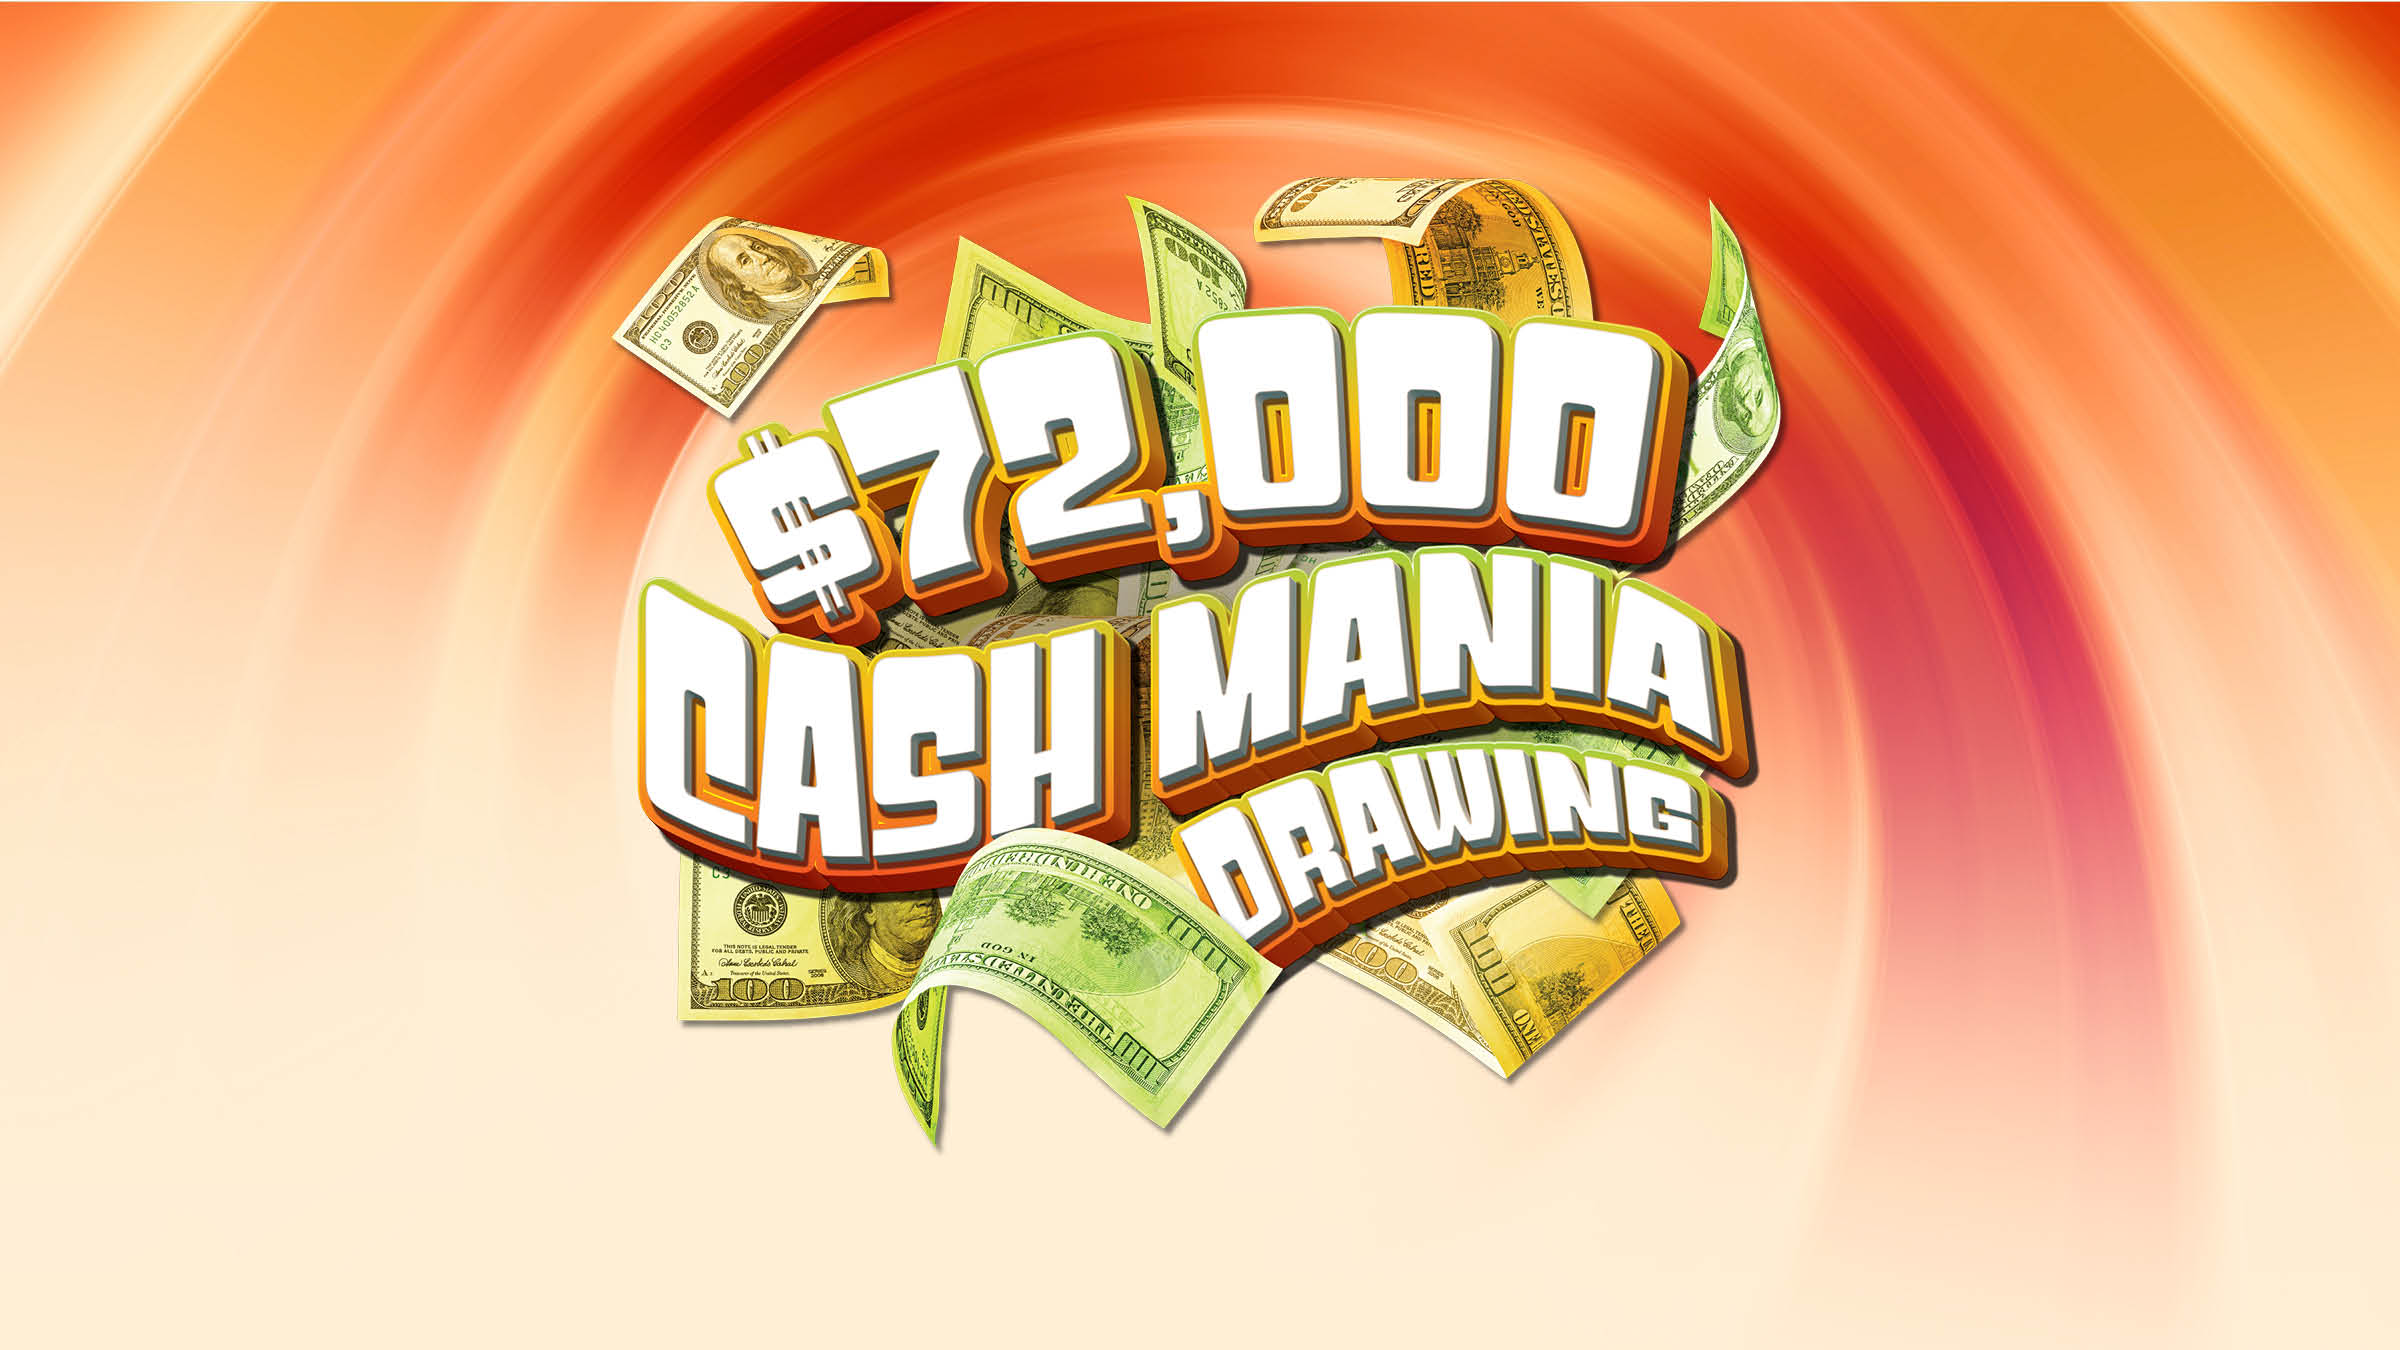 $72,000 Cash Mania Drawing